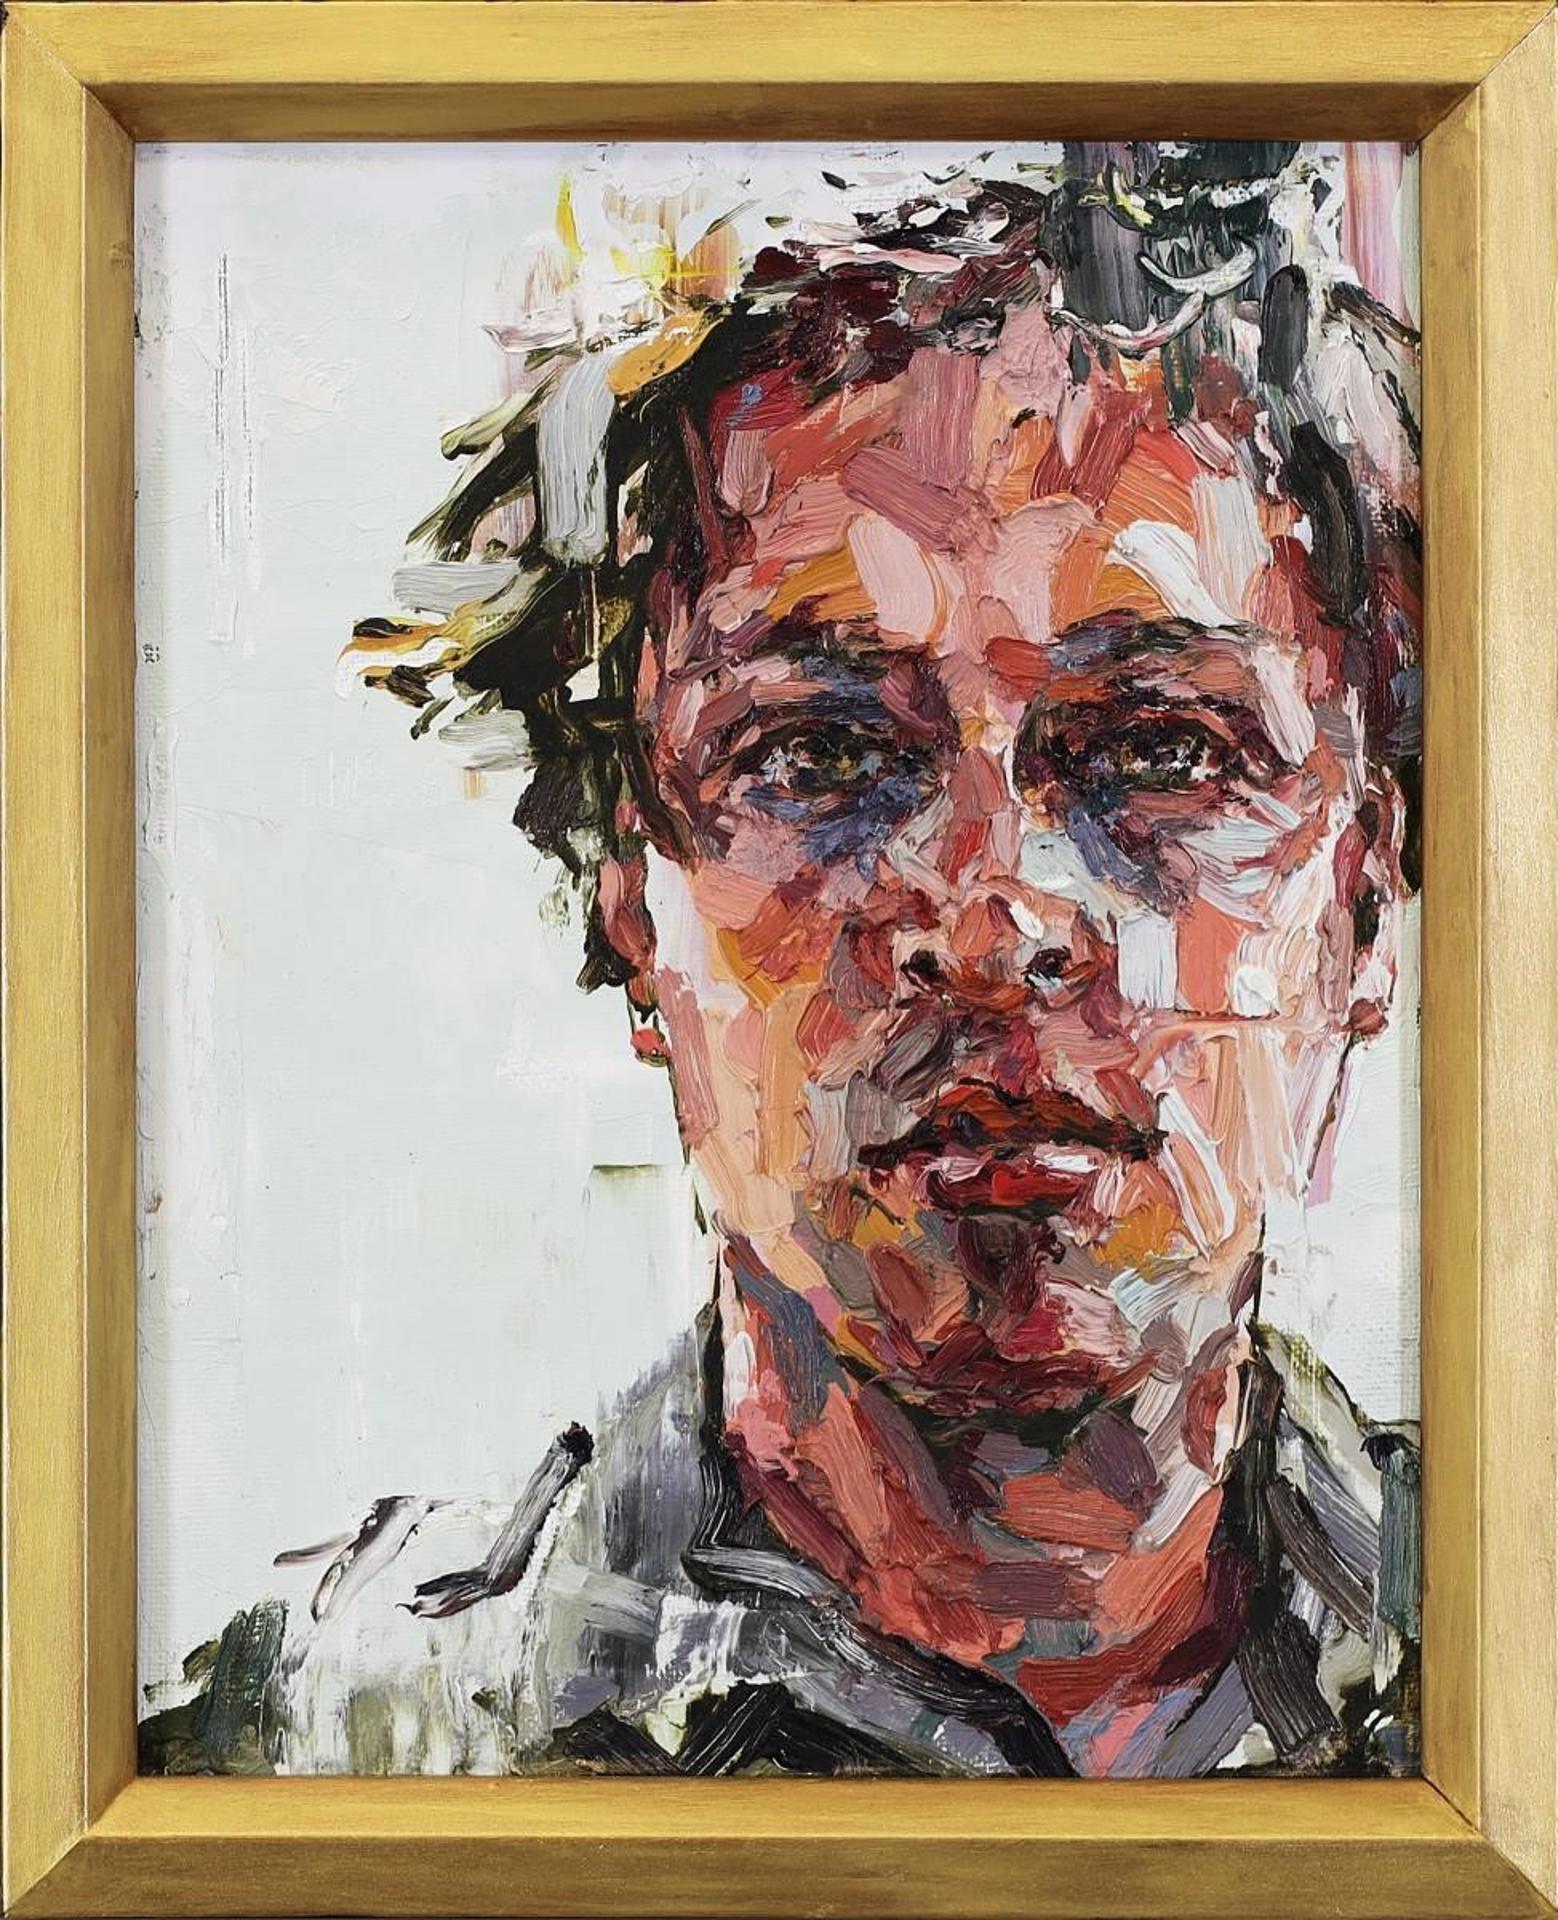 Aaron Siderenko (1956) - Untitled, Self-Portrait